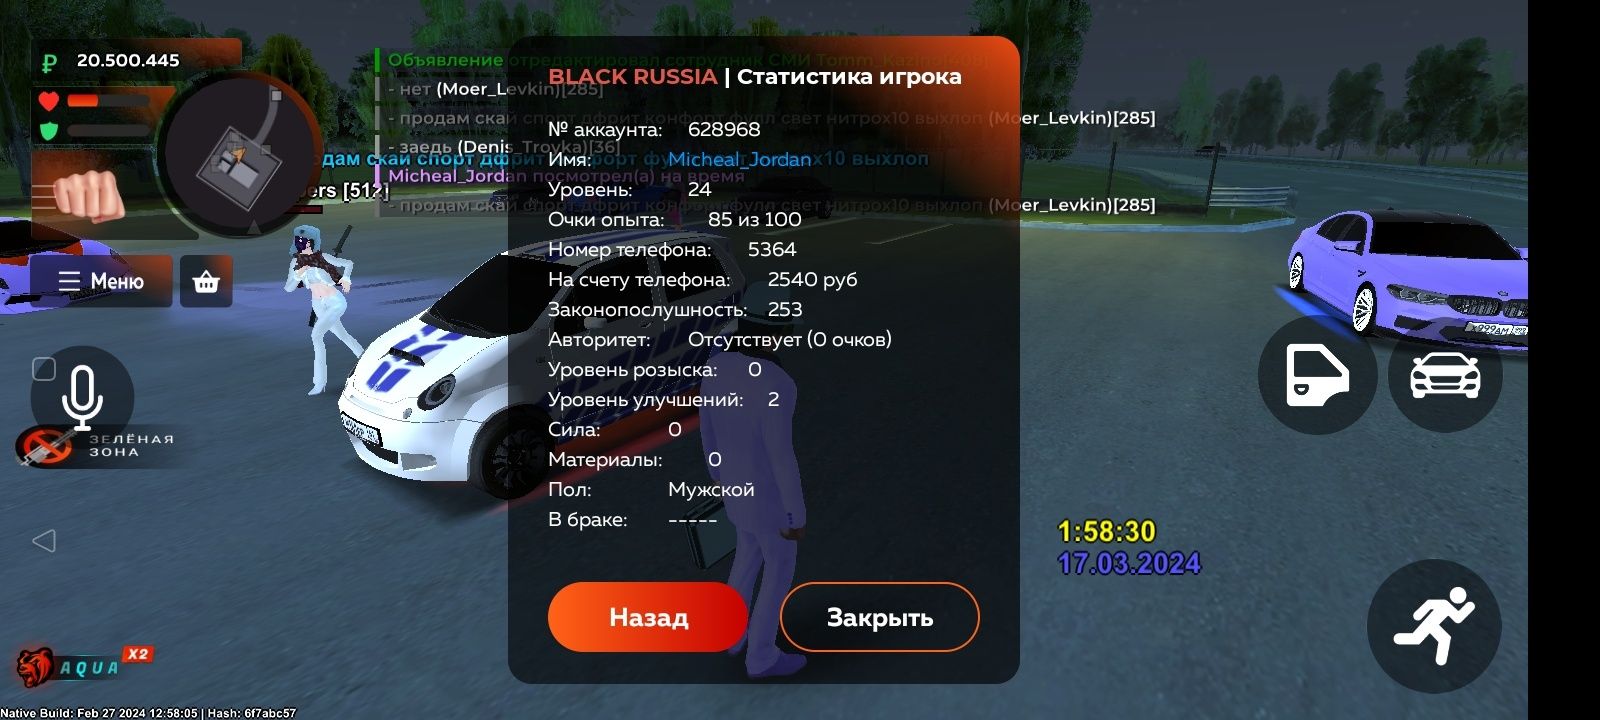 Black Russia аккаунт 24ур